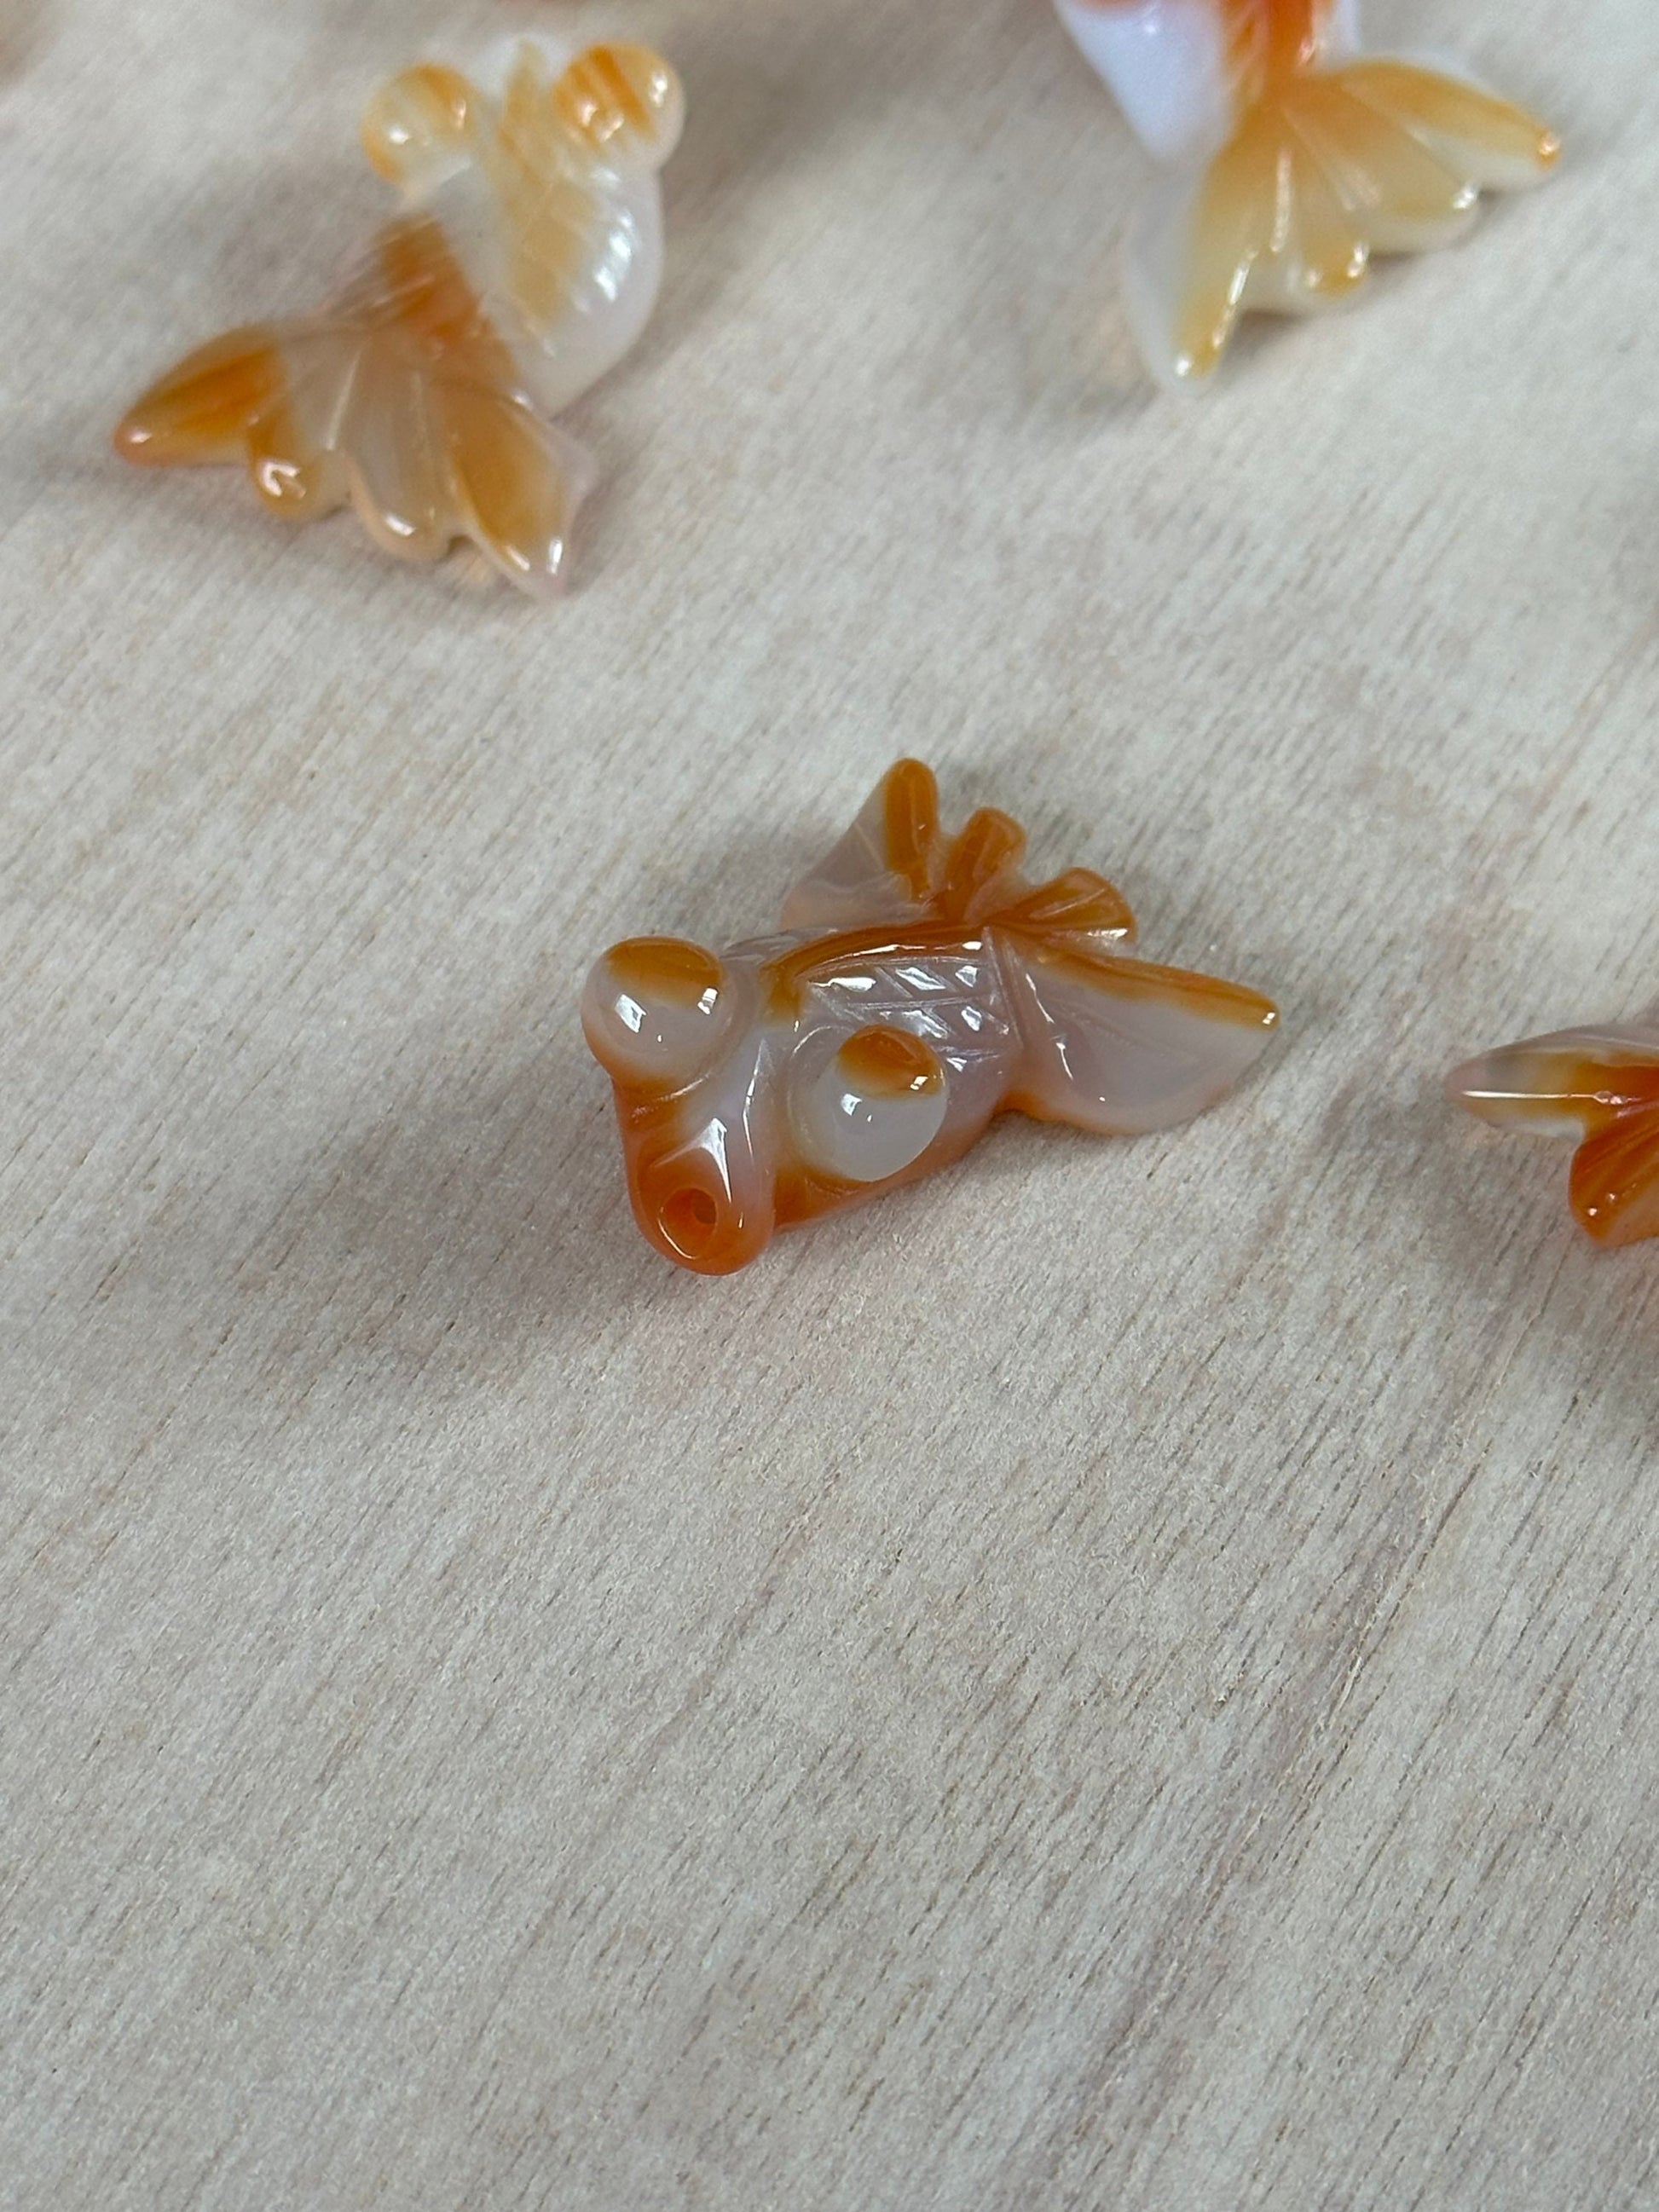 Carved Carnelian Goldfish | Polished Gemstone Fish Carving